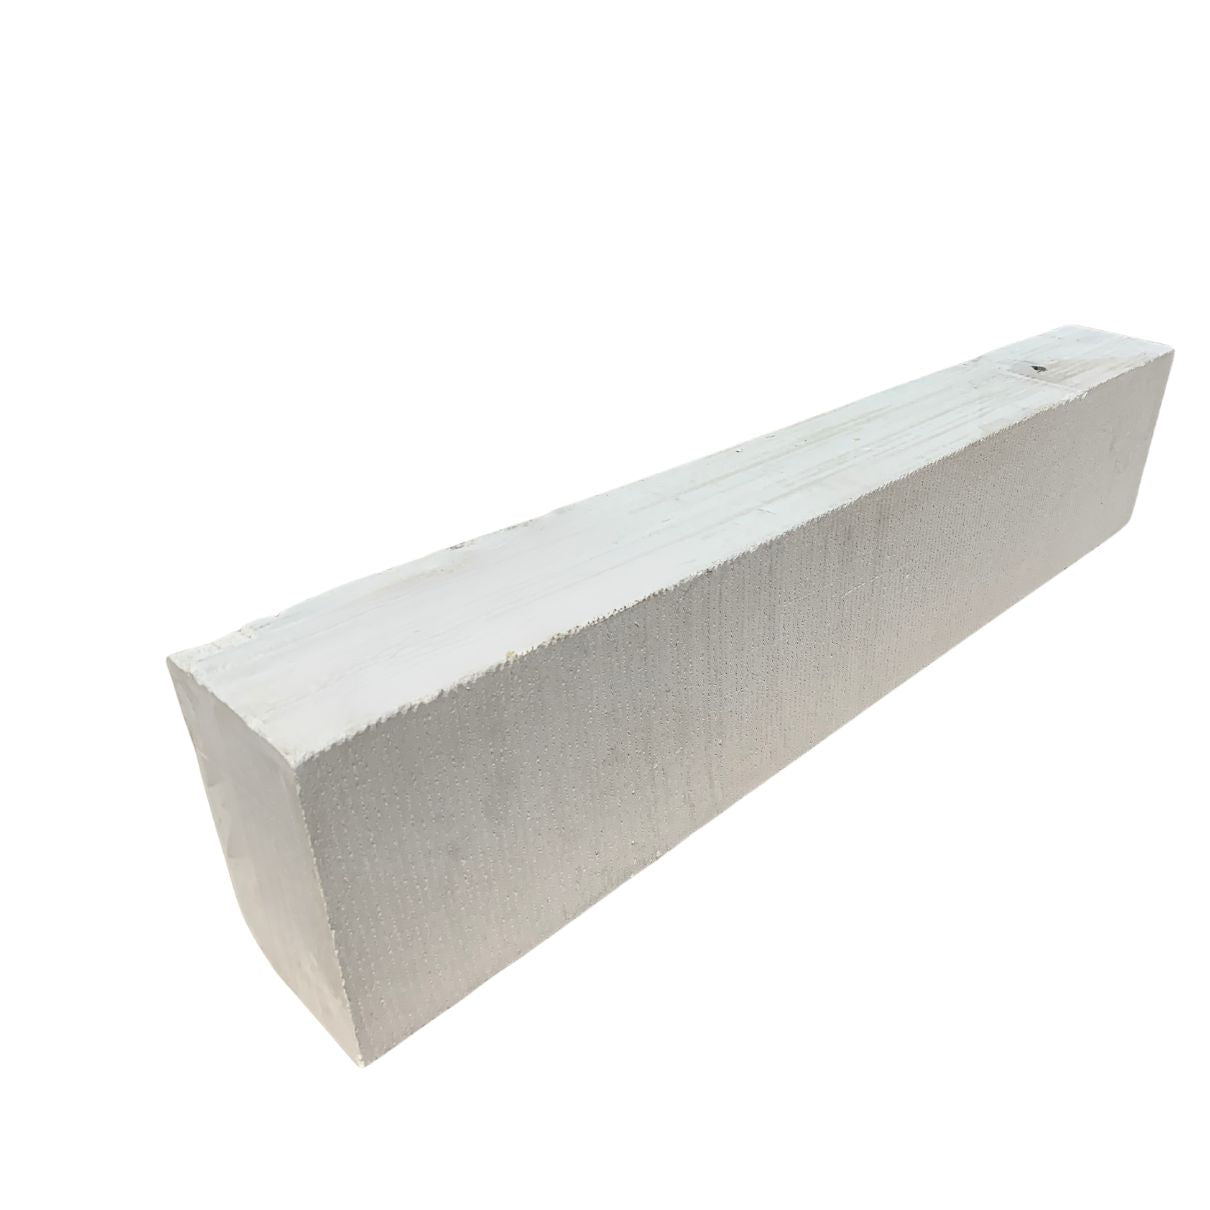 Aerated concrete Lintel 1500x250x150mm